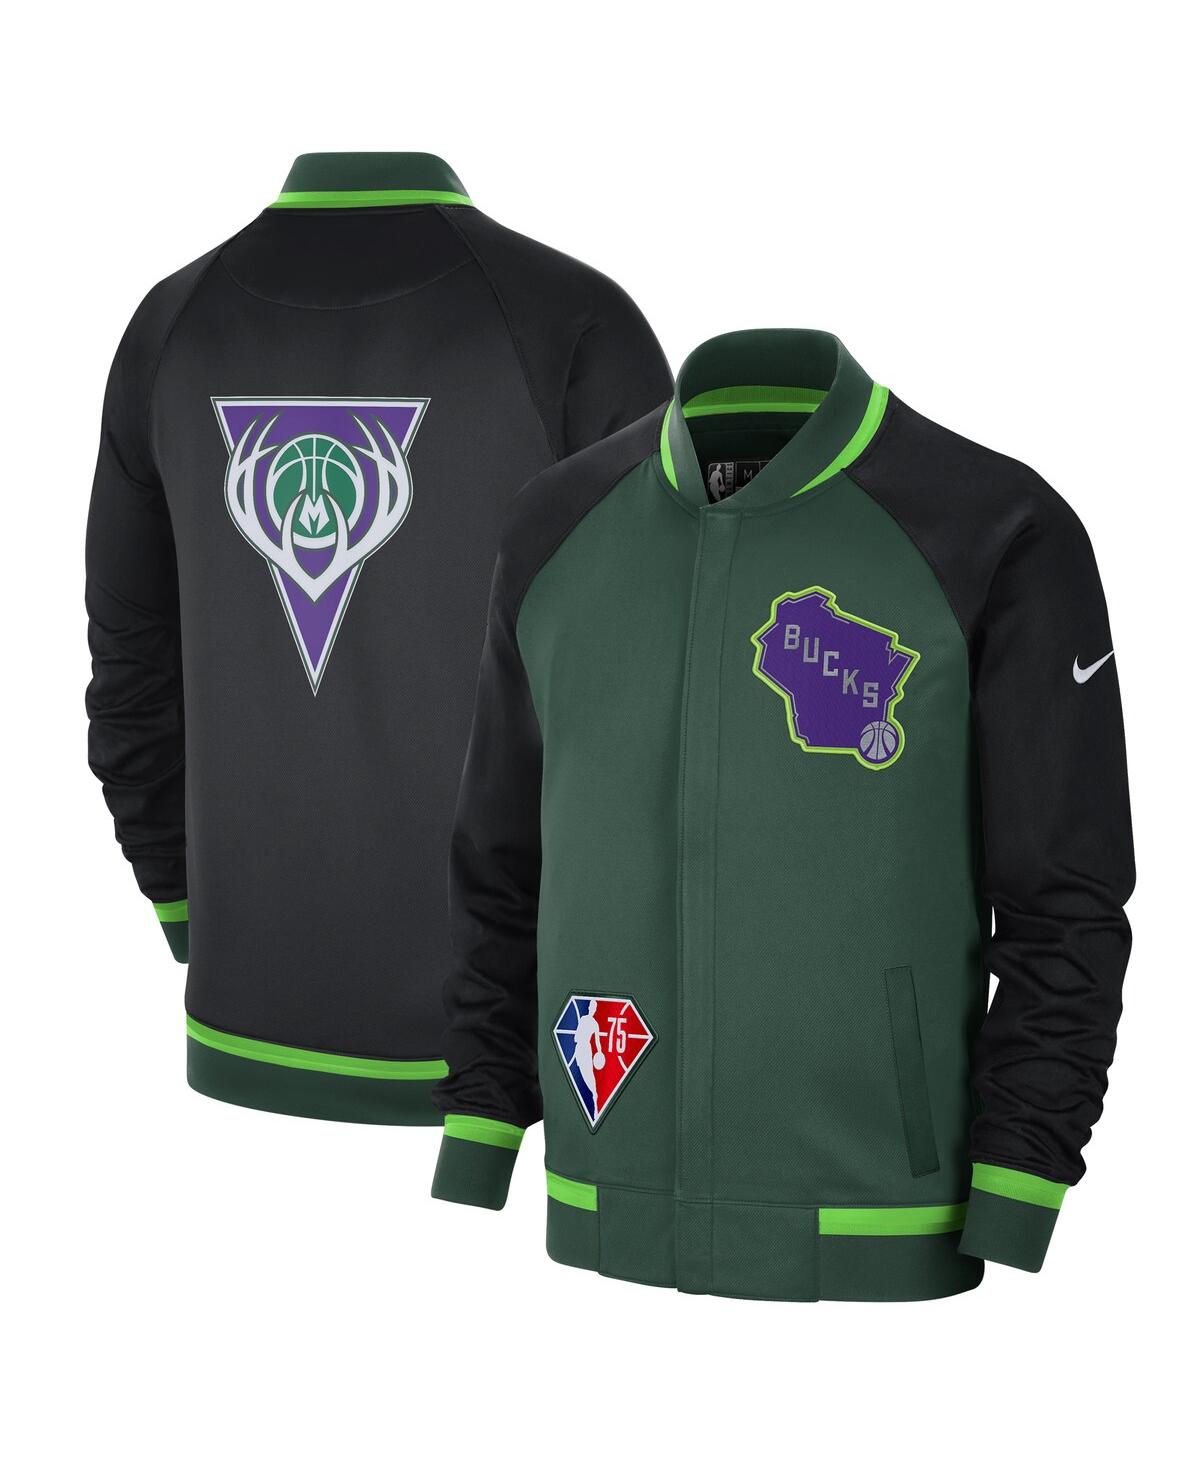 Men's Nike Green, Black Milwaukee Bucks 2021/22 City Edition Therma Flex Showtime Full-Zip Bomber Jacket - Green, Black